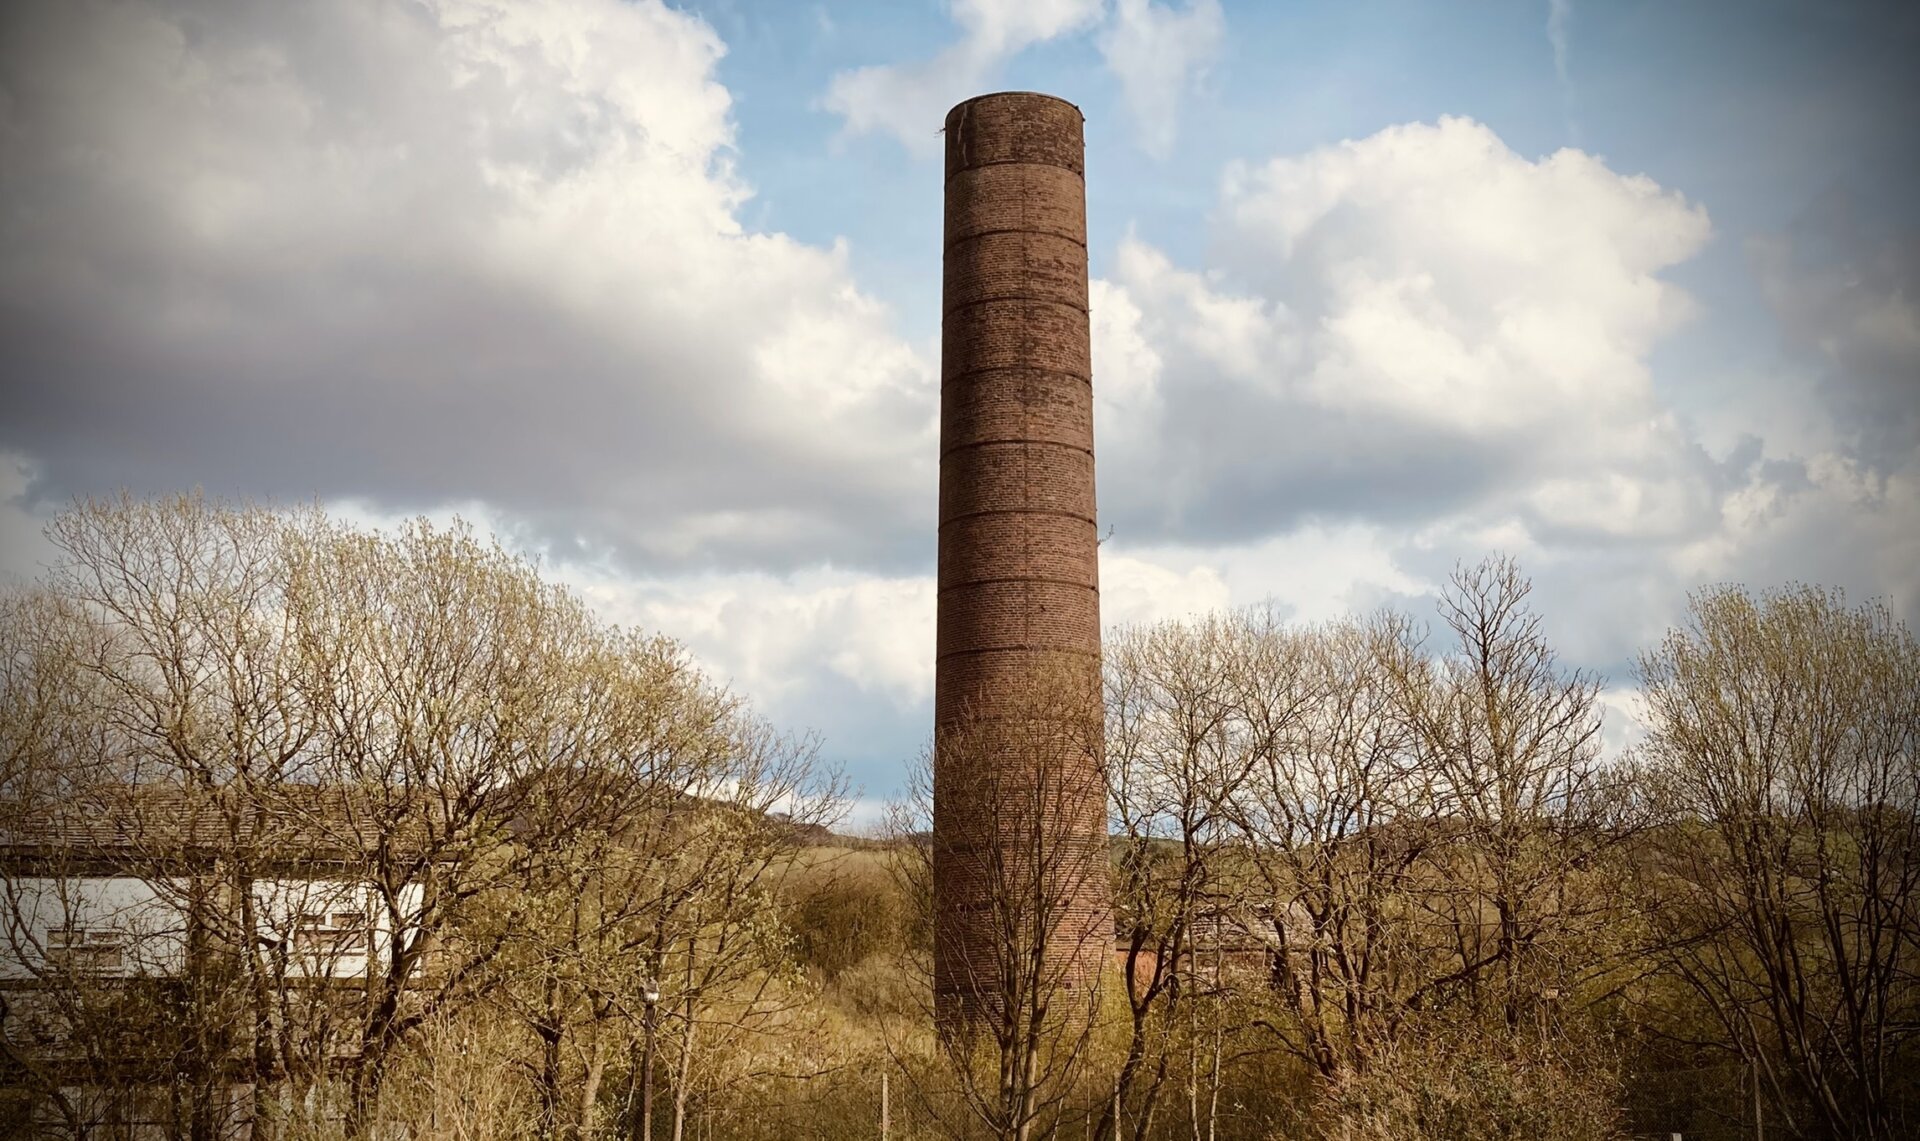 The chimney near Nuttall Park